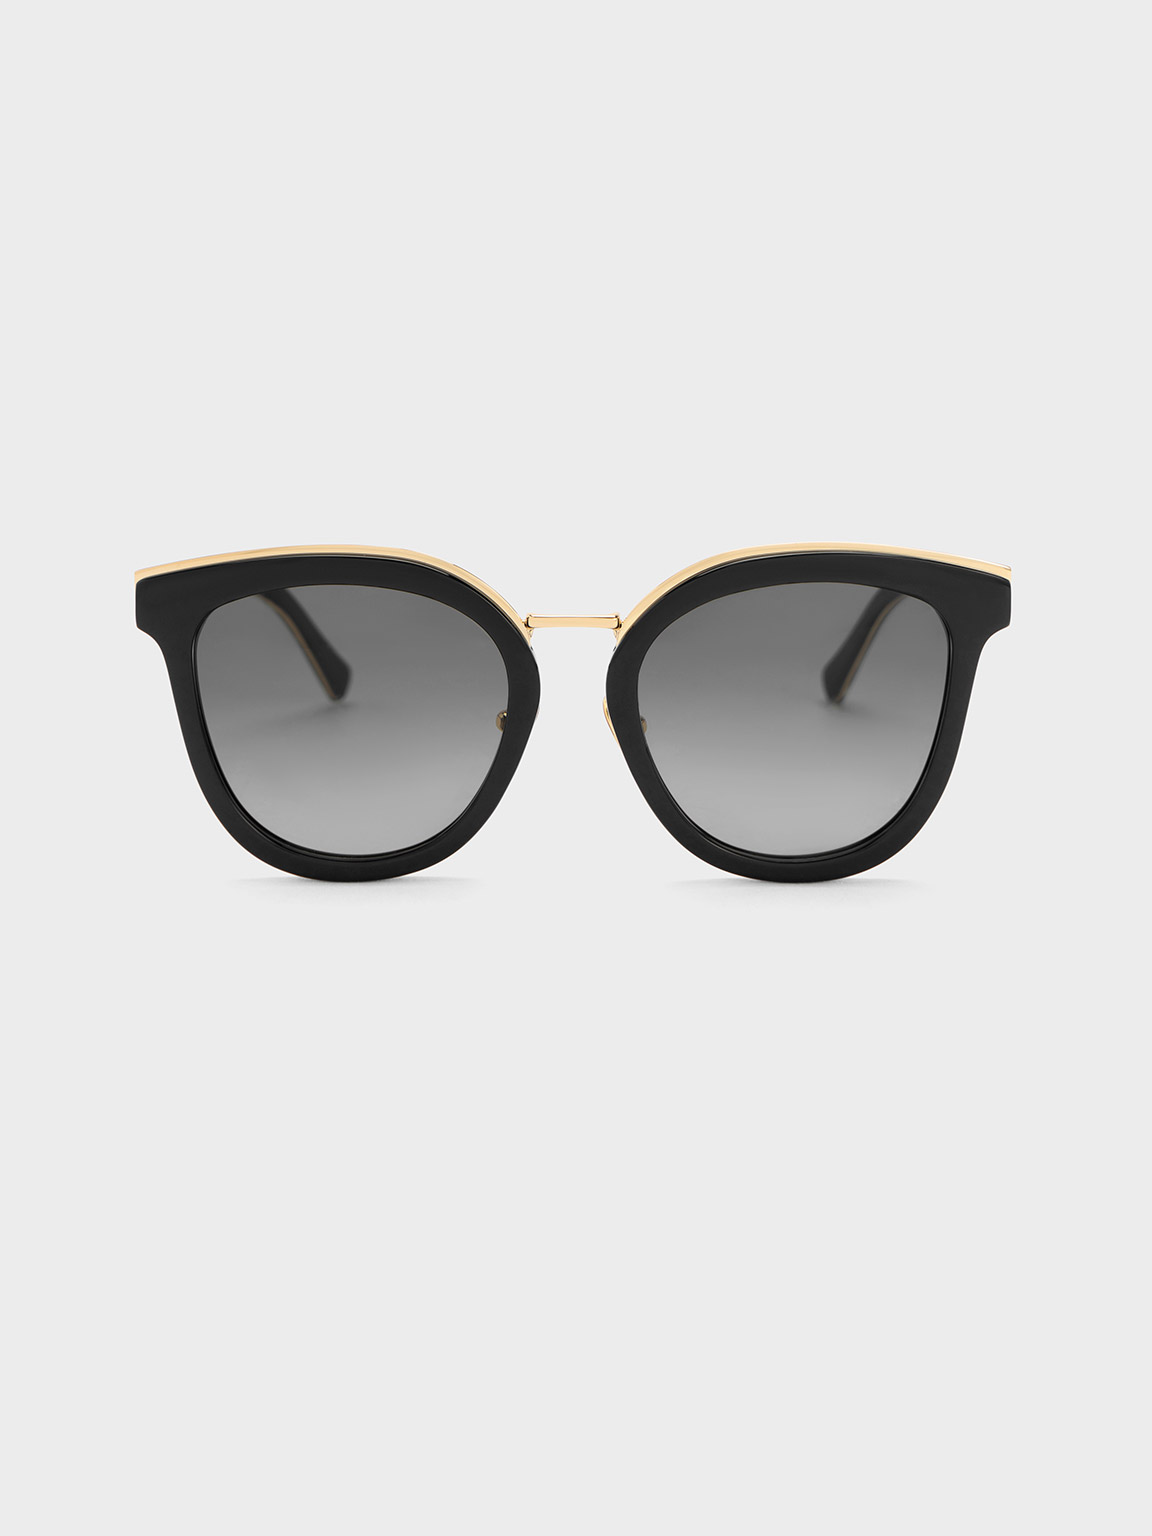 Discover 263+ j black sunglasses best